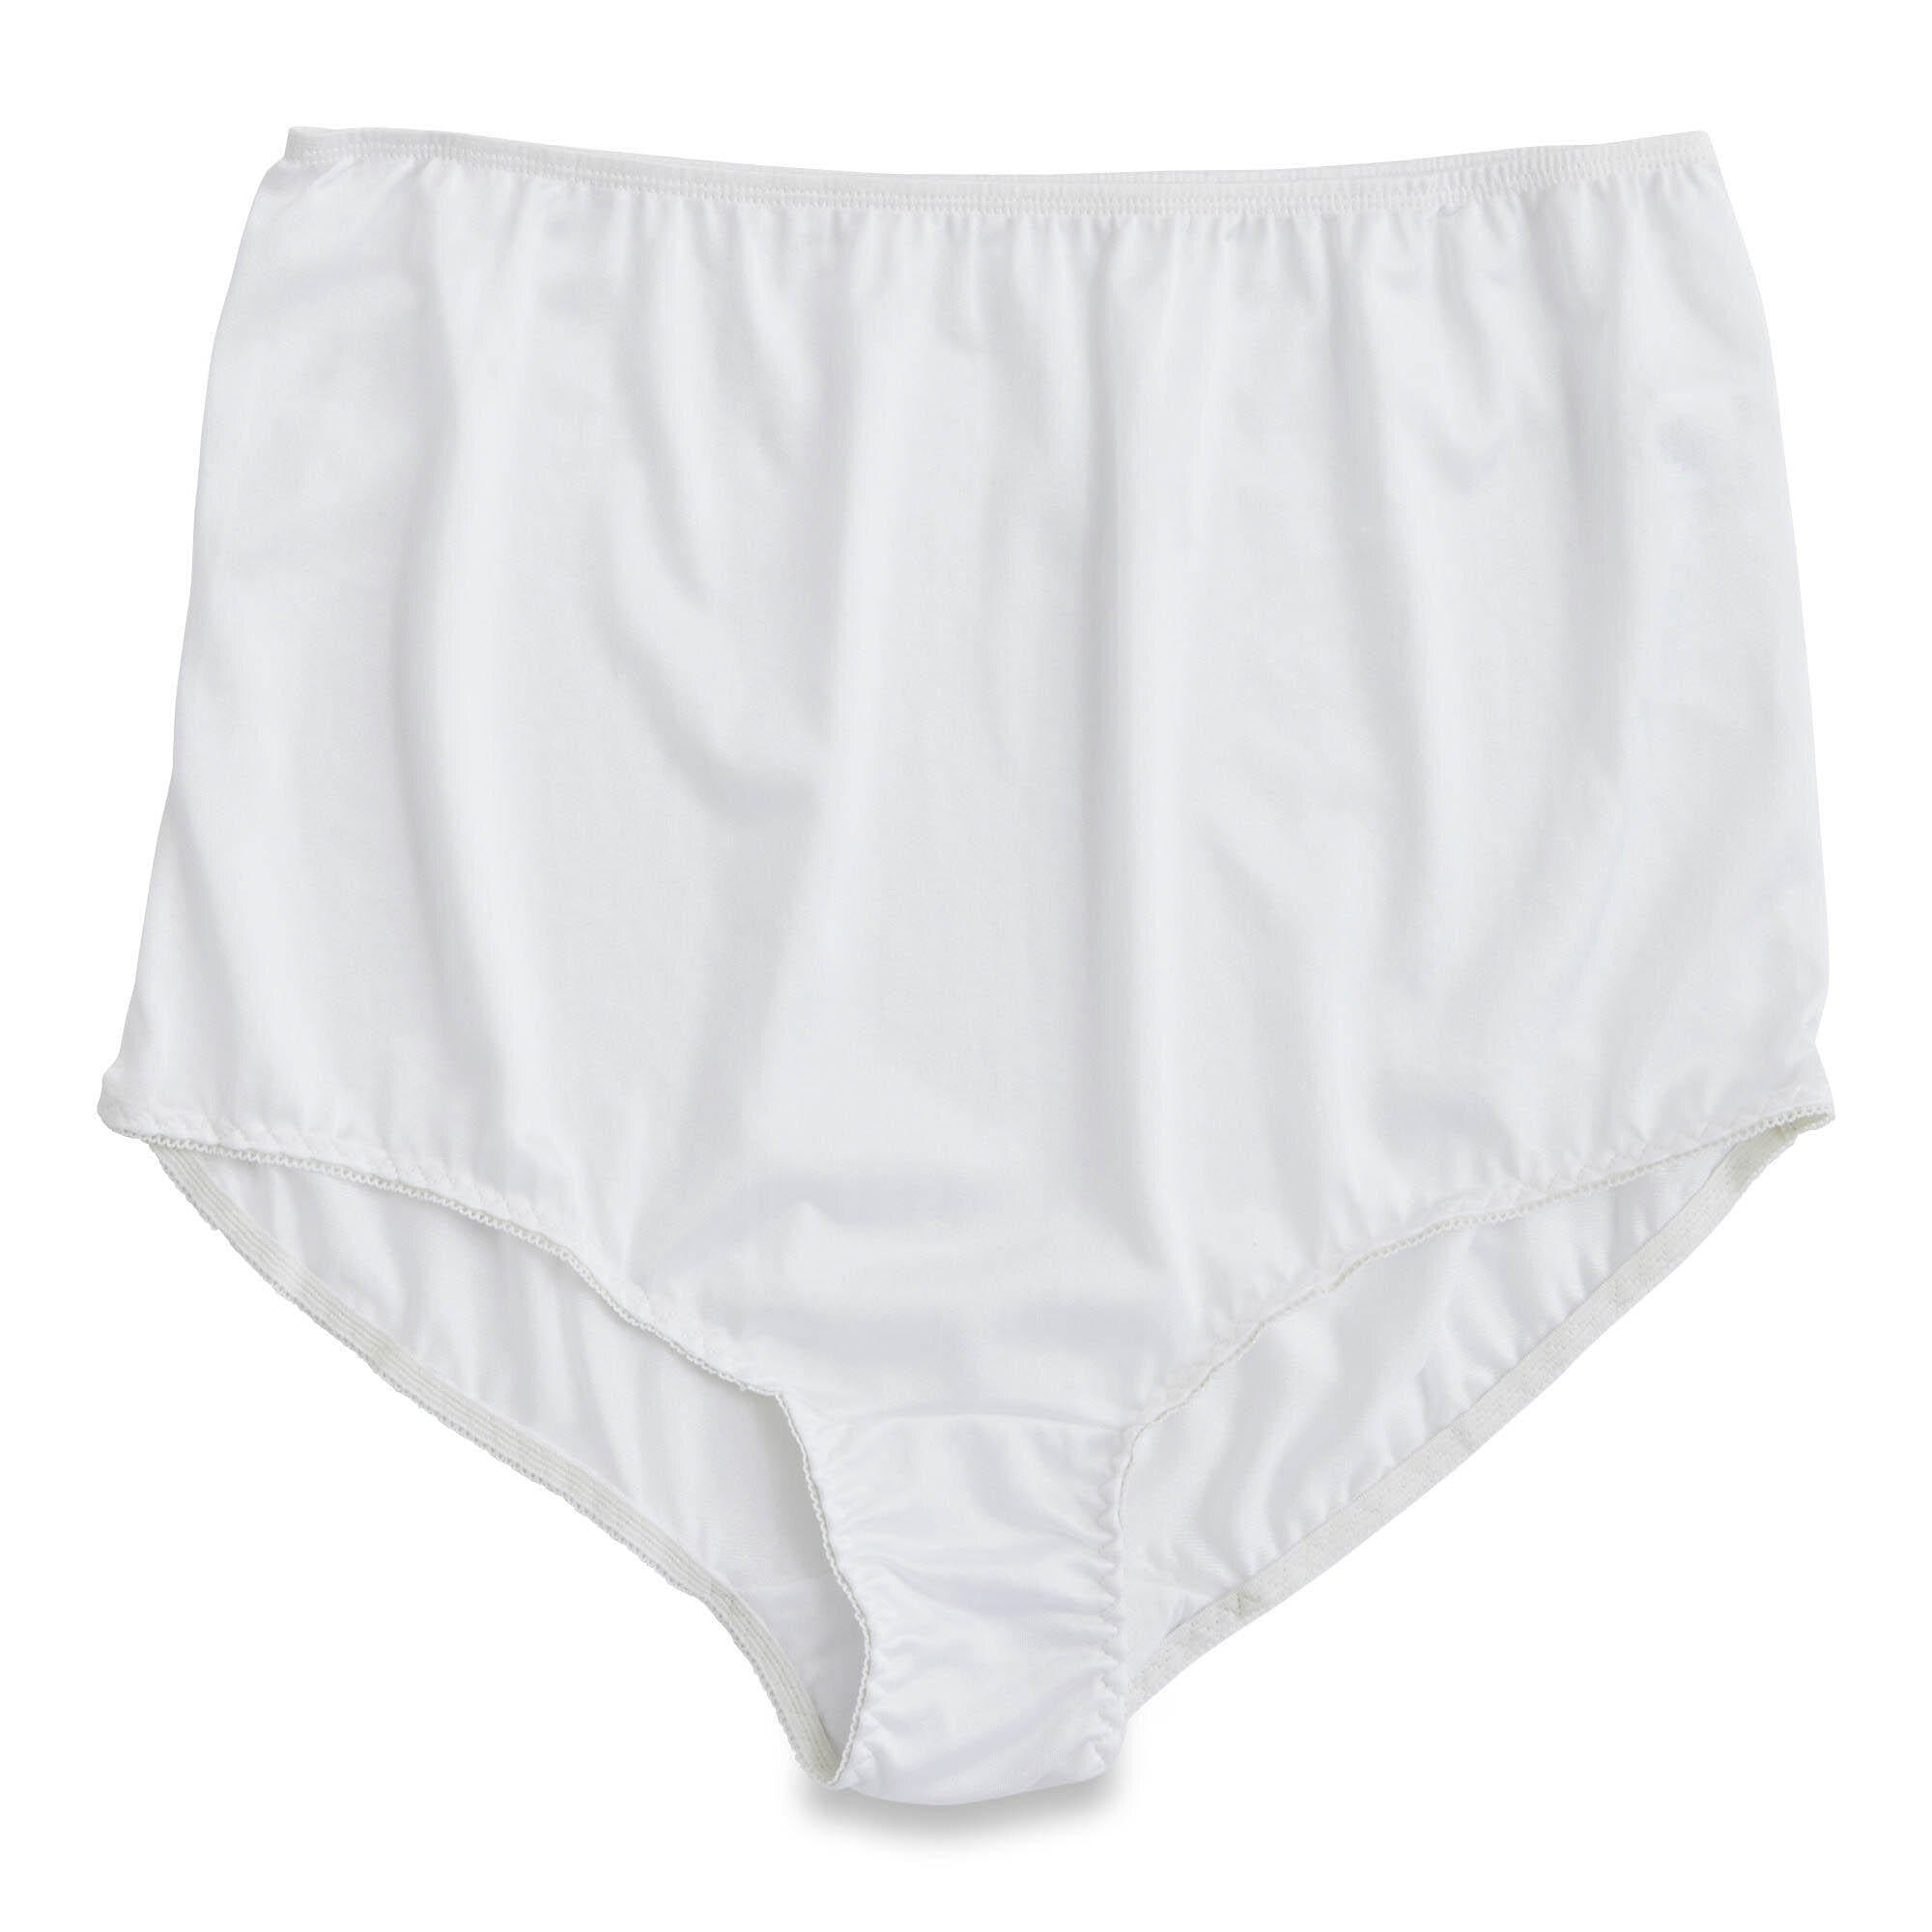 Antz Pantz Ladies T Rex Bikini Briefs Panties Underwear size 14 16